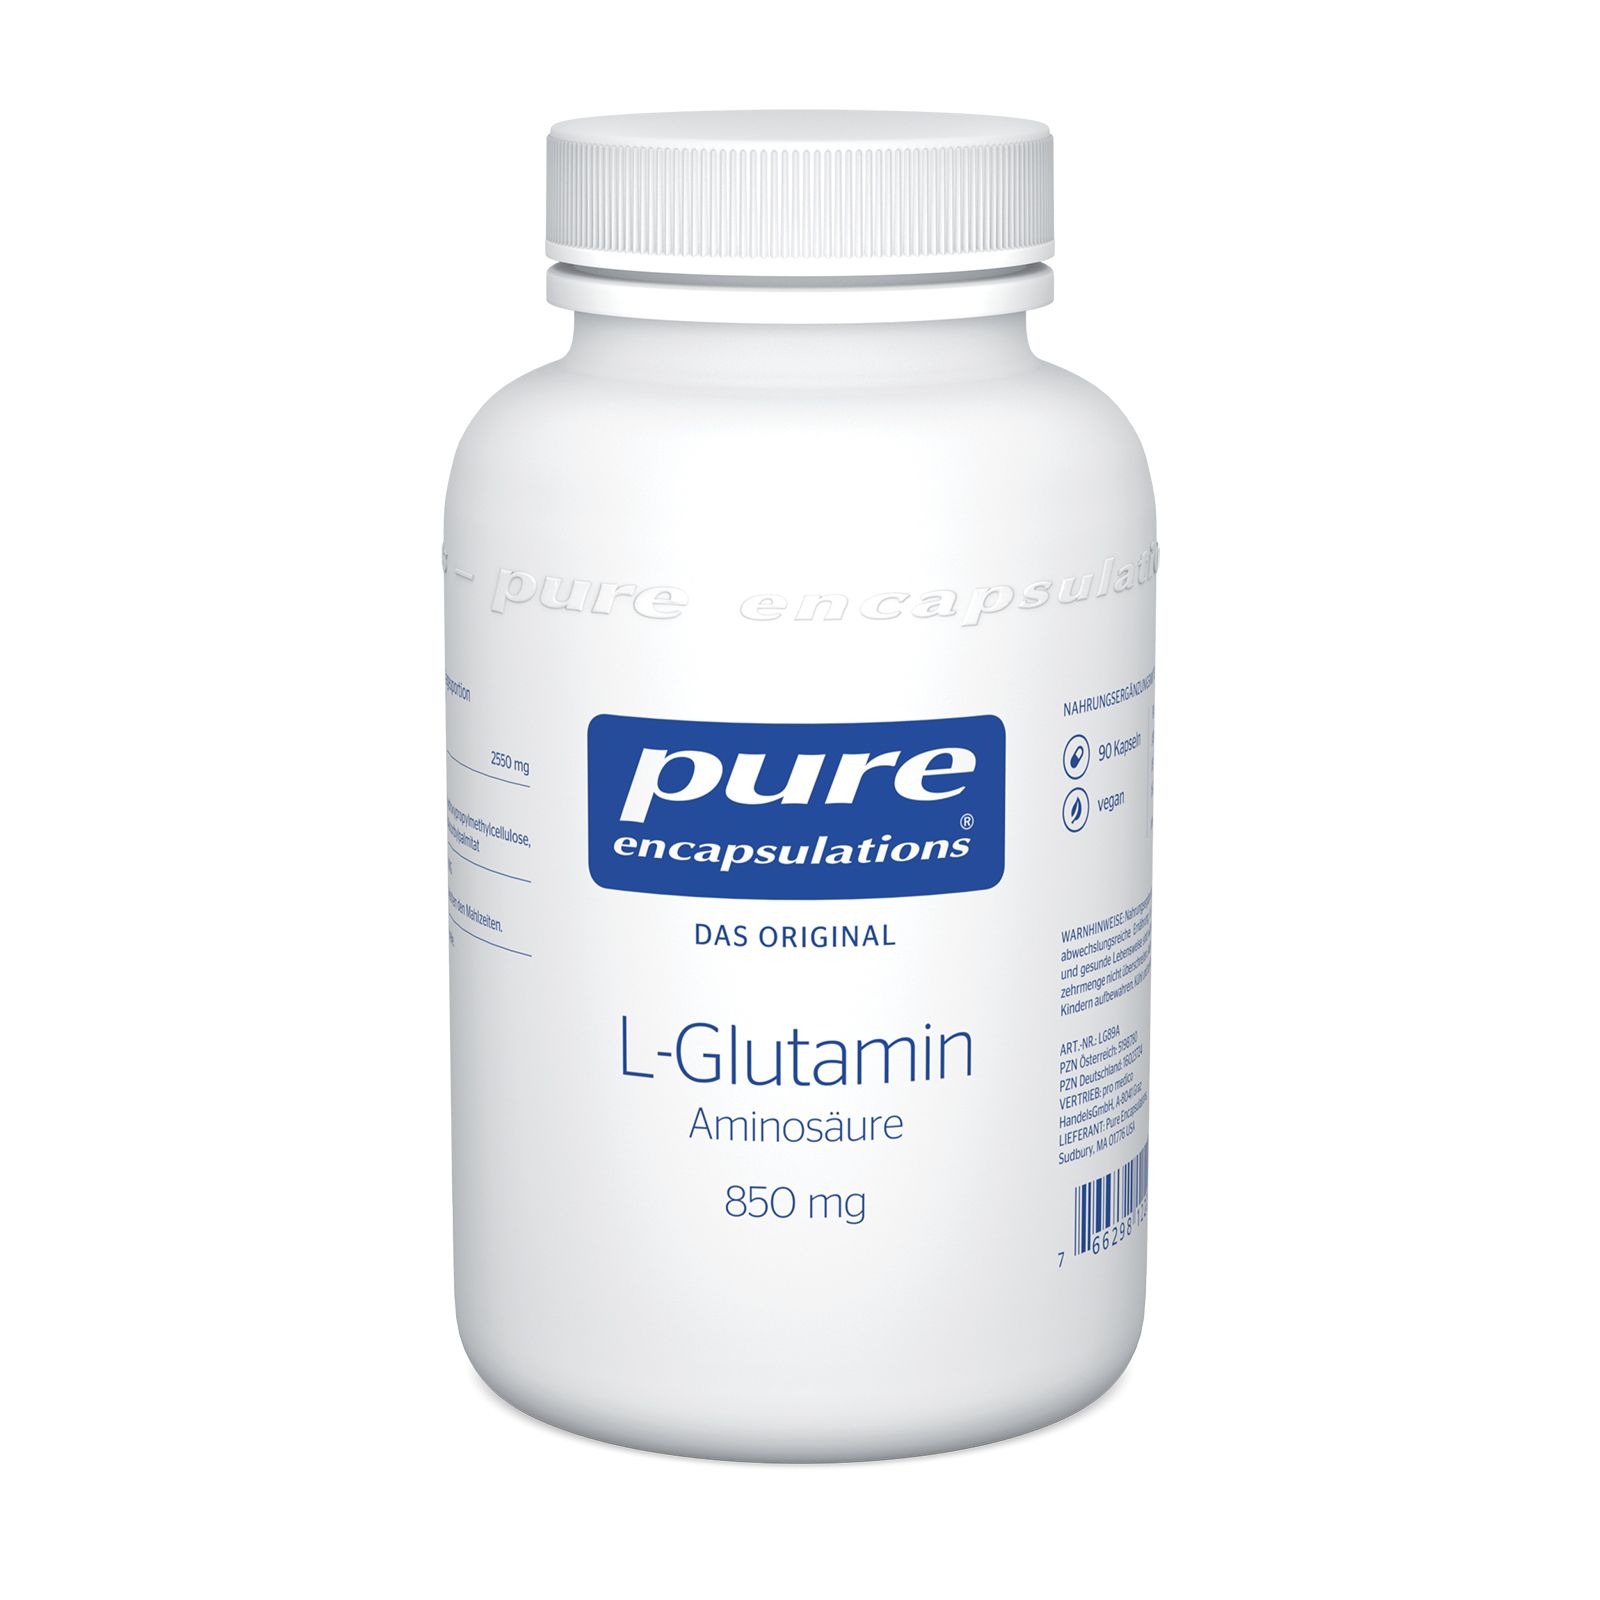 pure encapsulations® L-Glutamin Aminosäure